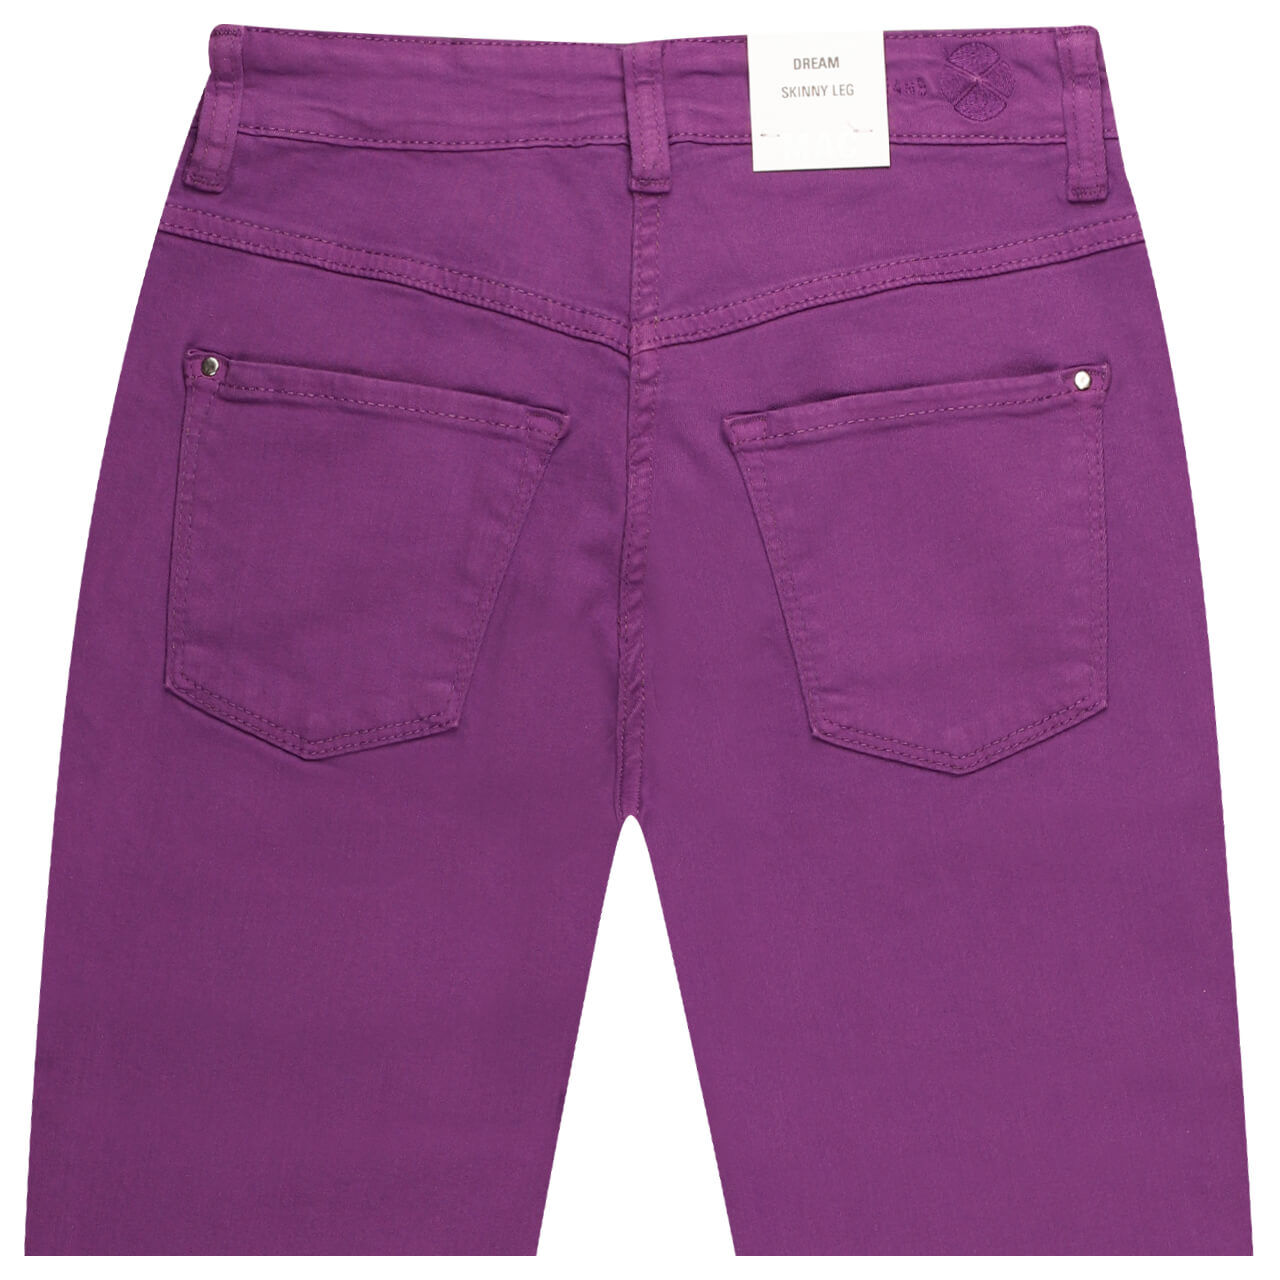 MAC Dream Skinny Jeans purple magic